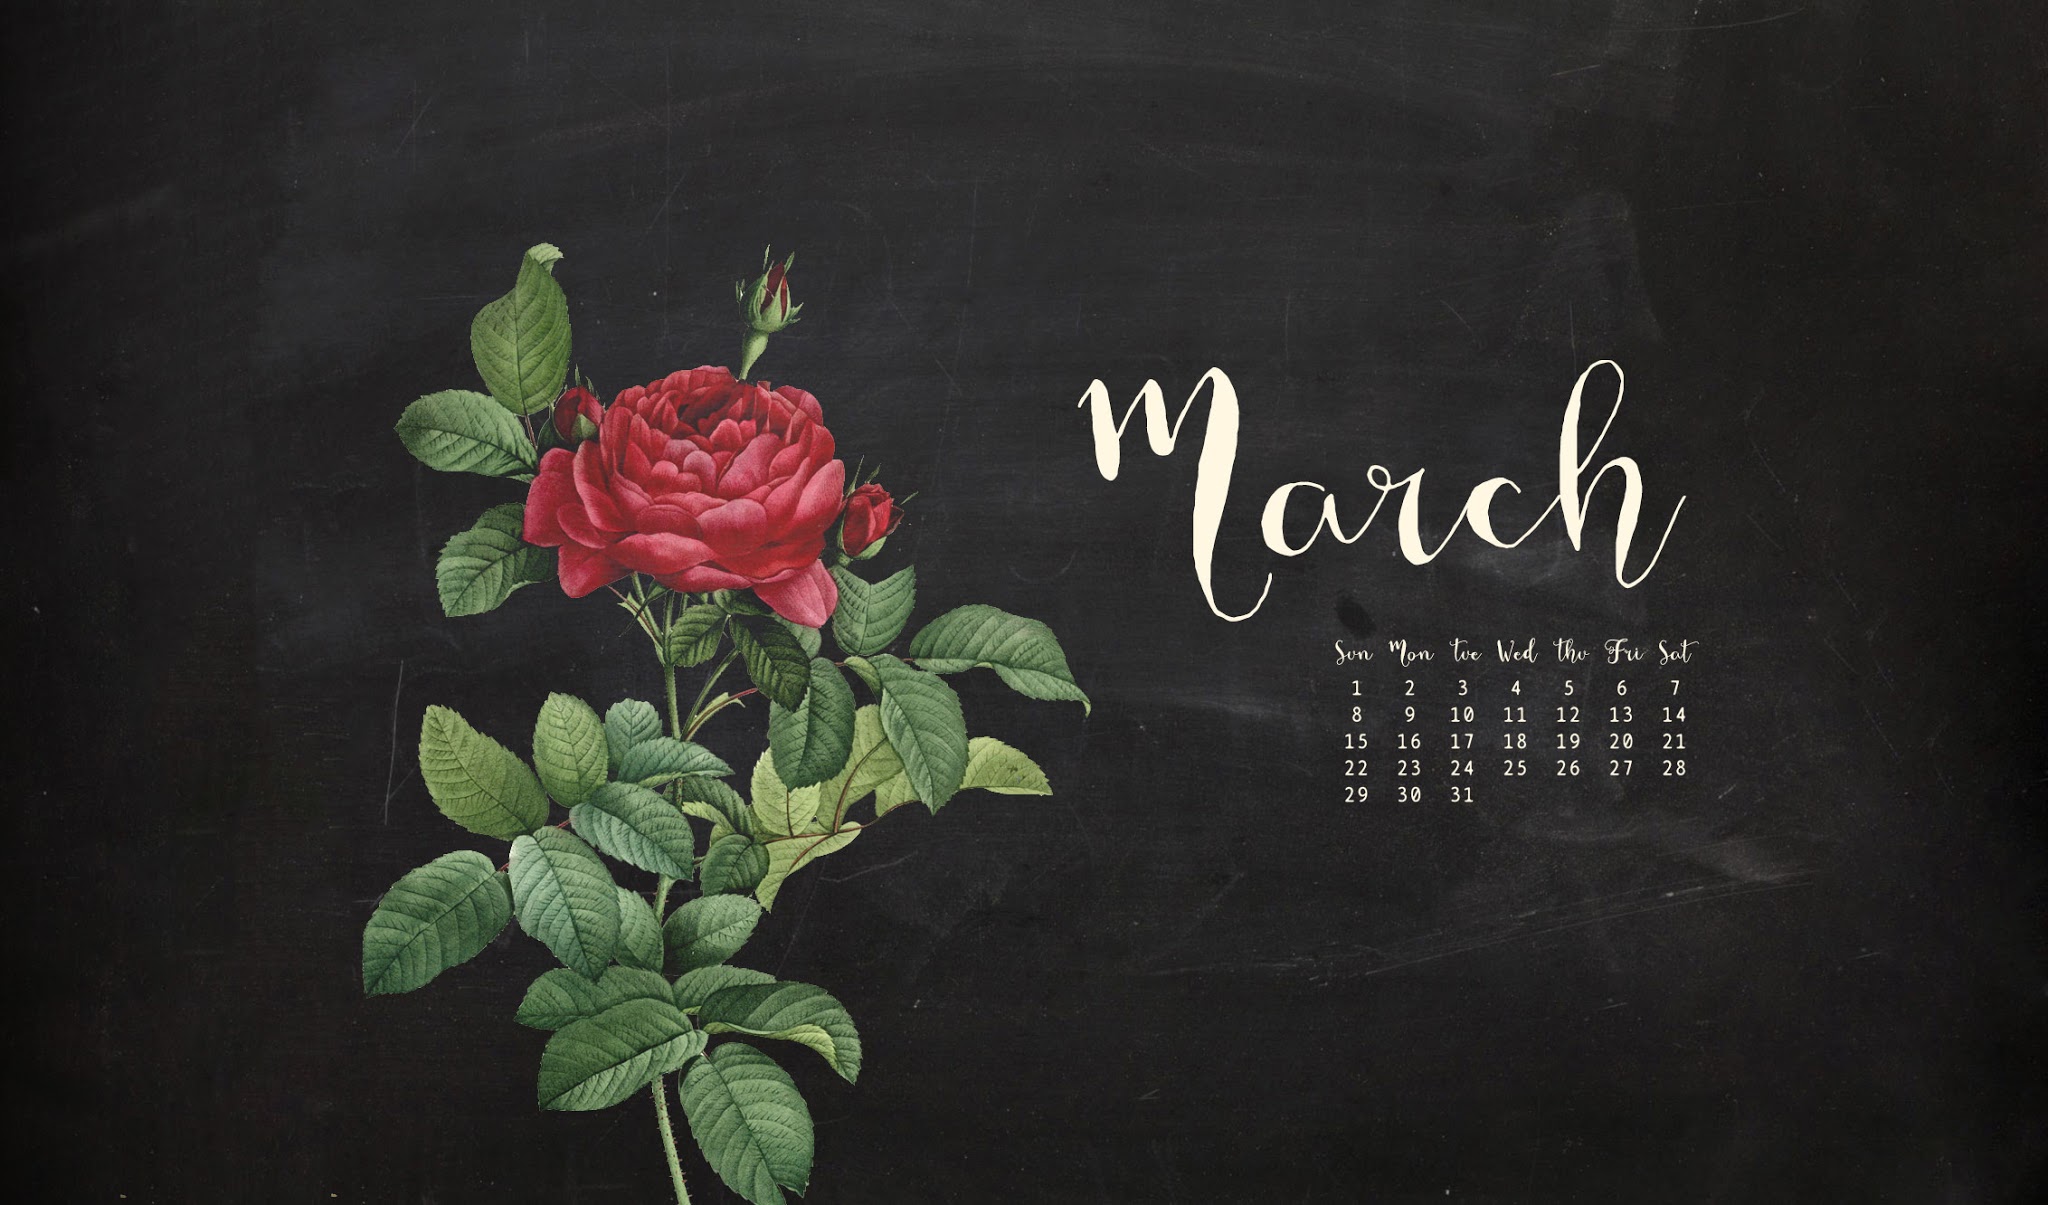 march desktop wallpaper,garden roses,font,text,blackboard,flower